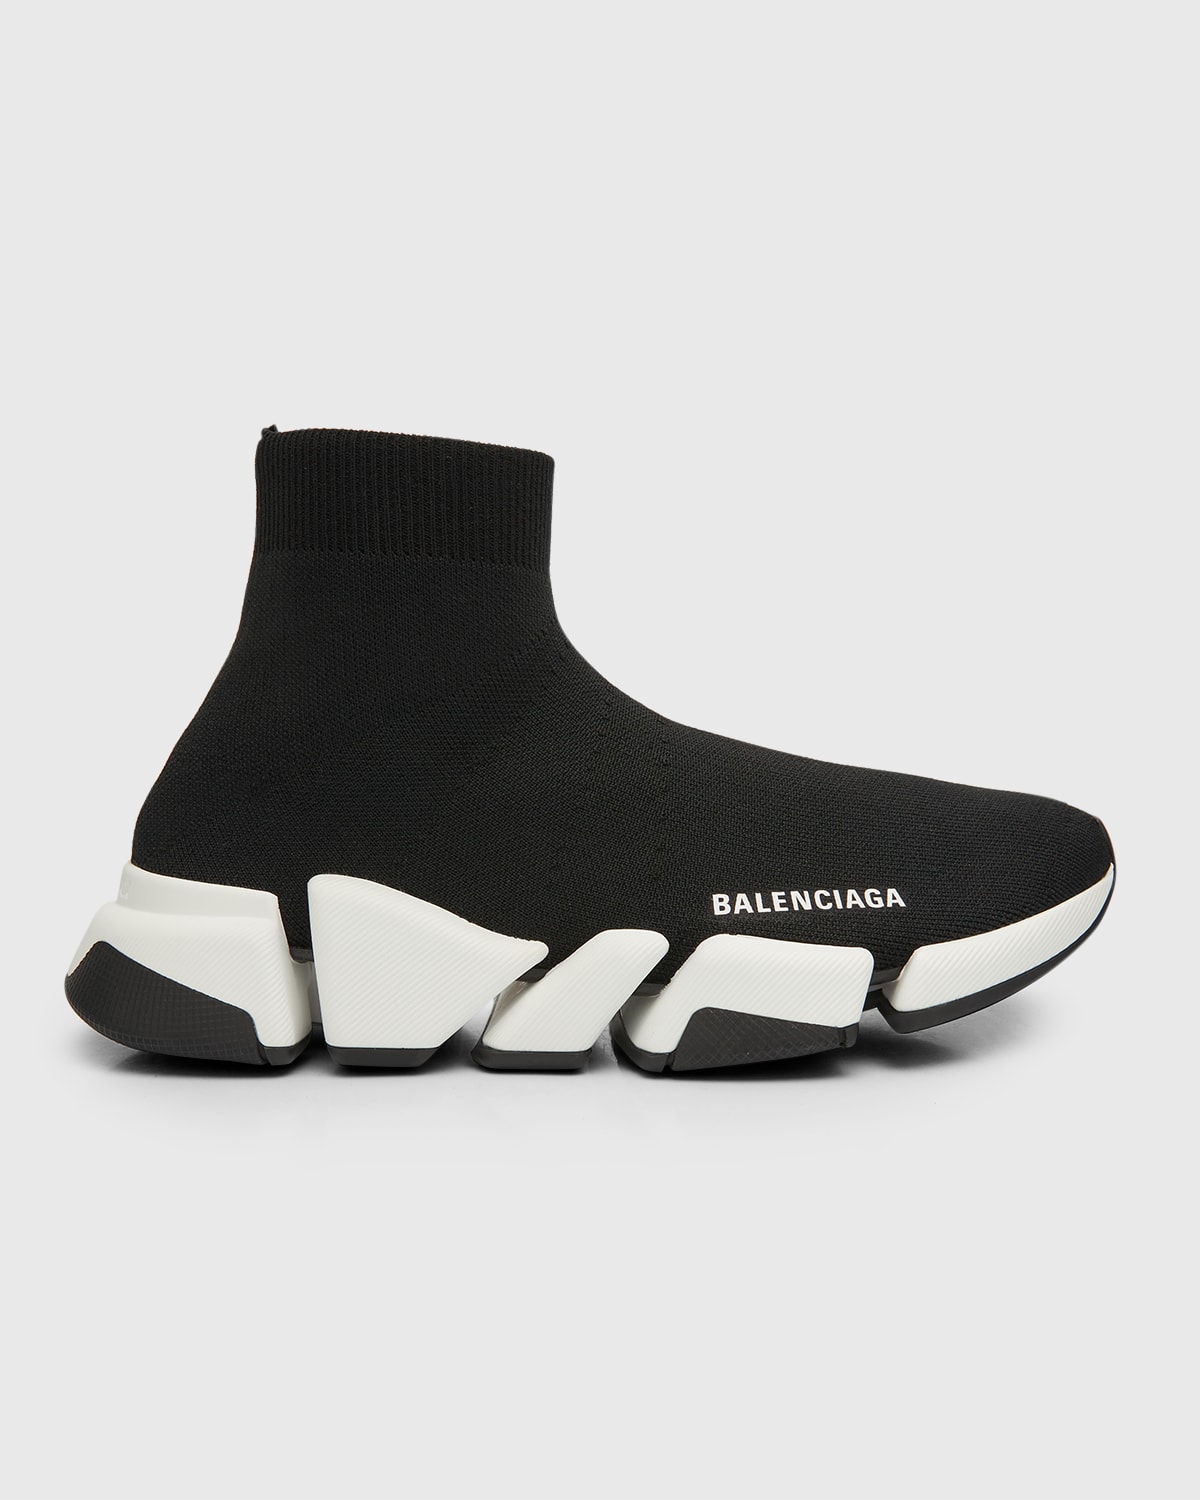 Verminderen regeling Misleidend Balenciaga Sneaker | Neiman Marcus